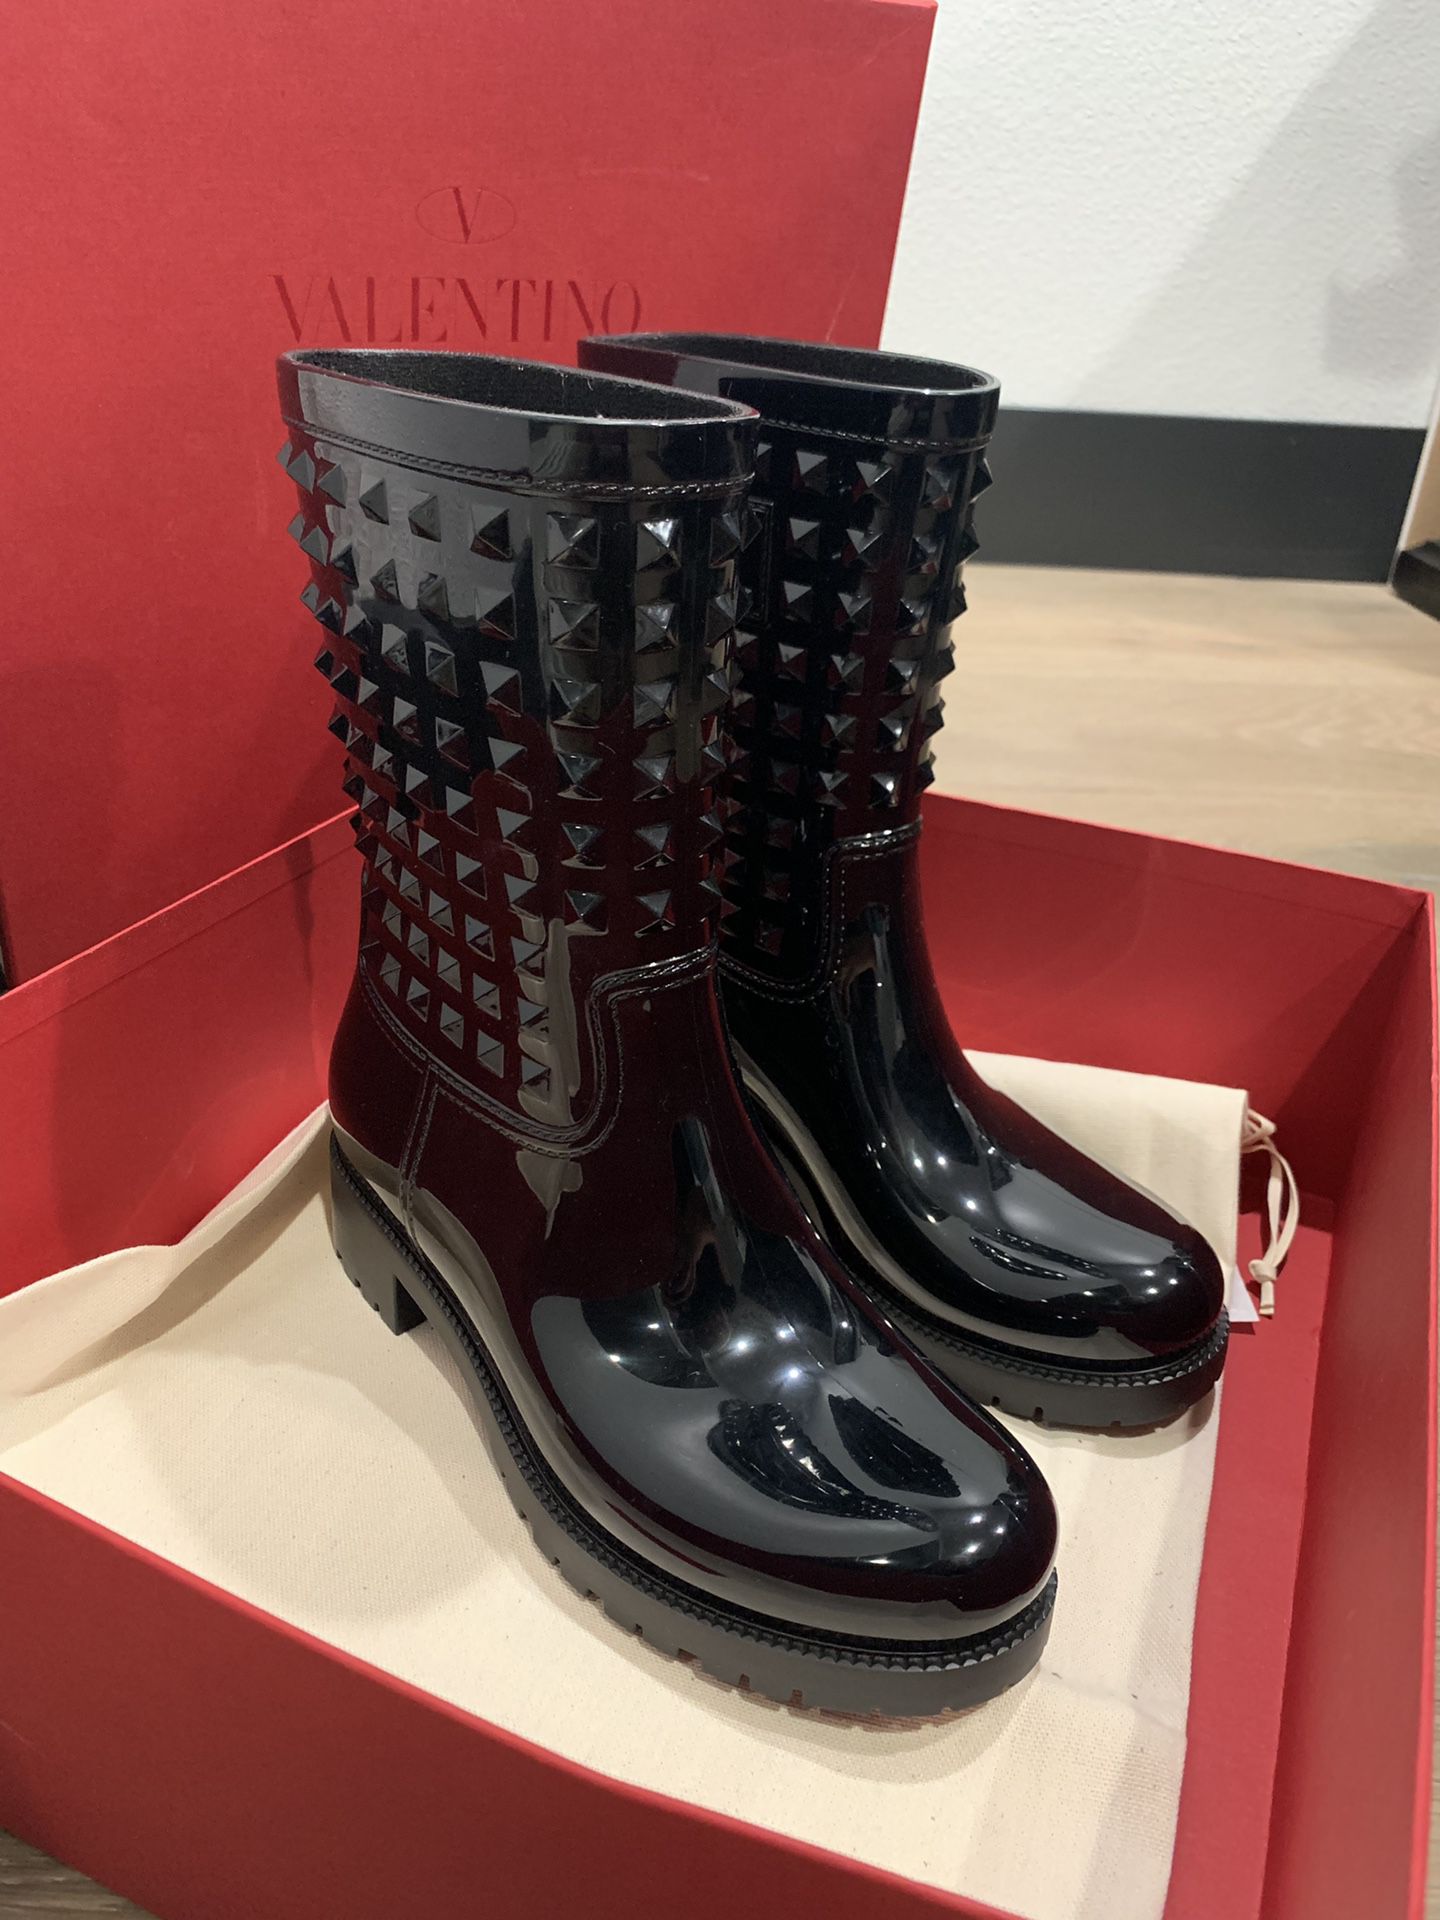 Valentino Rockstud rain boots